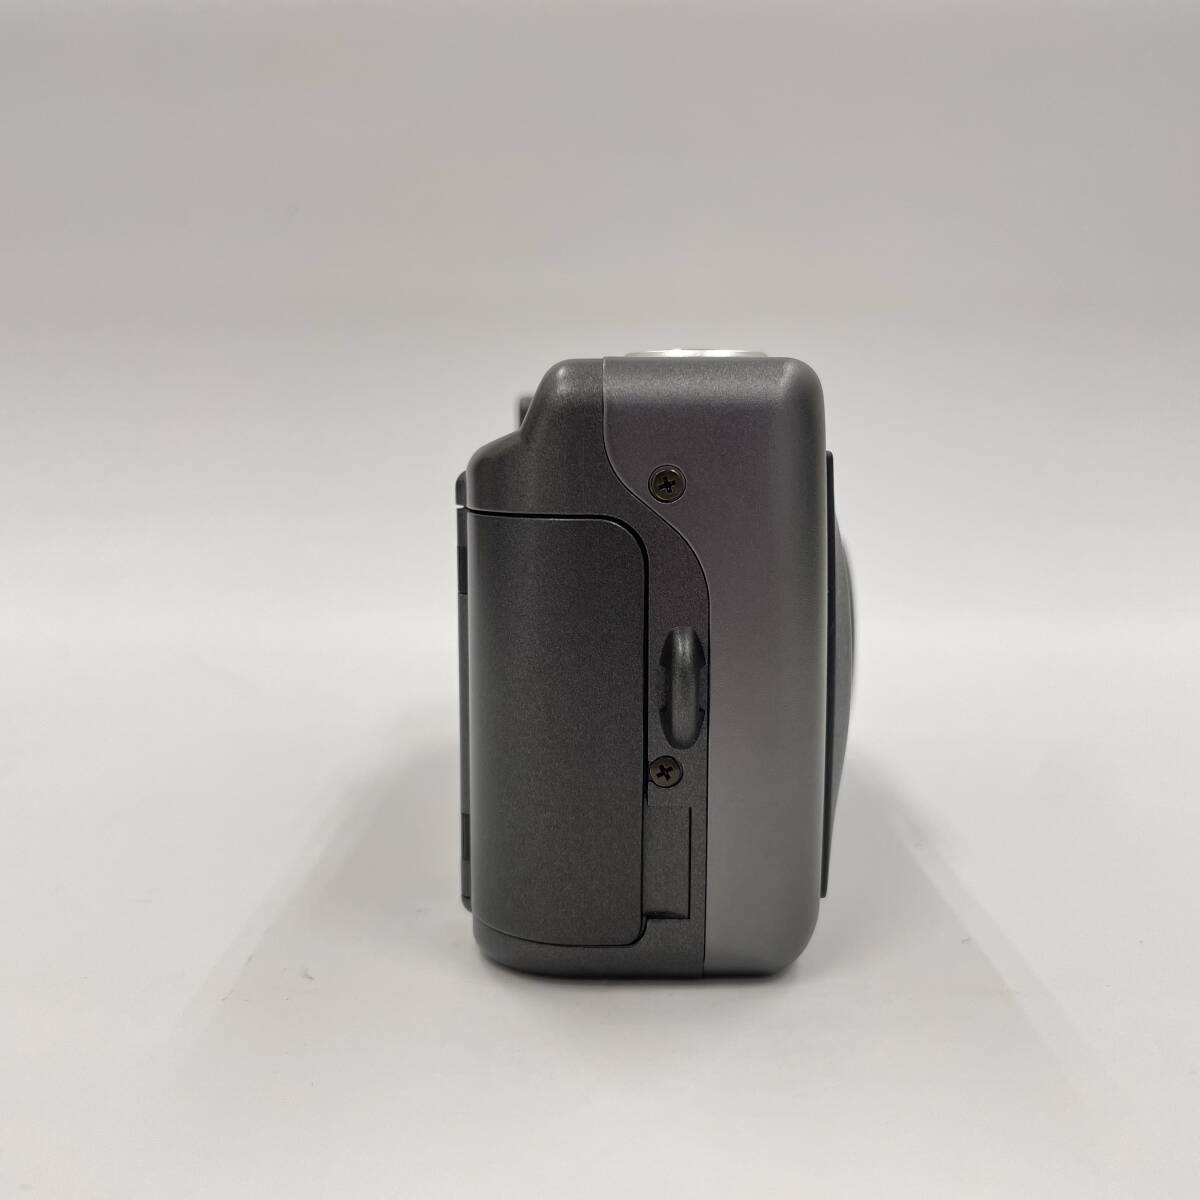 [ box attaching beautiful goods ] Kyocera T Zoom 35mm Film Camera Kyocera compact film camera 